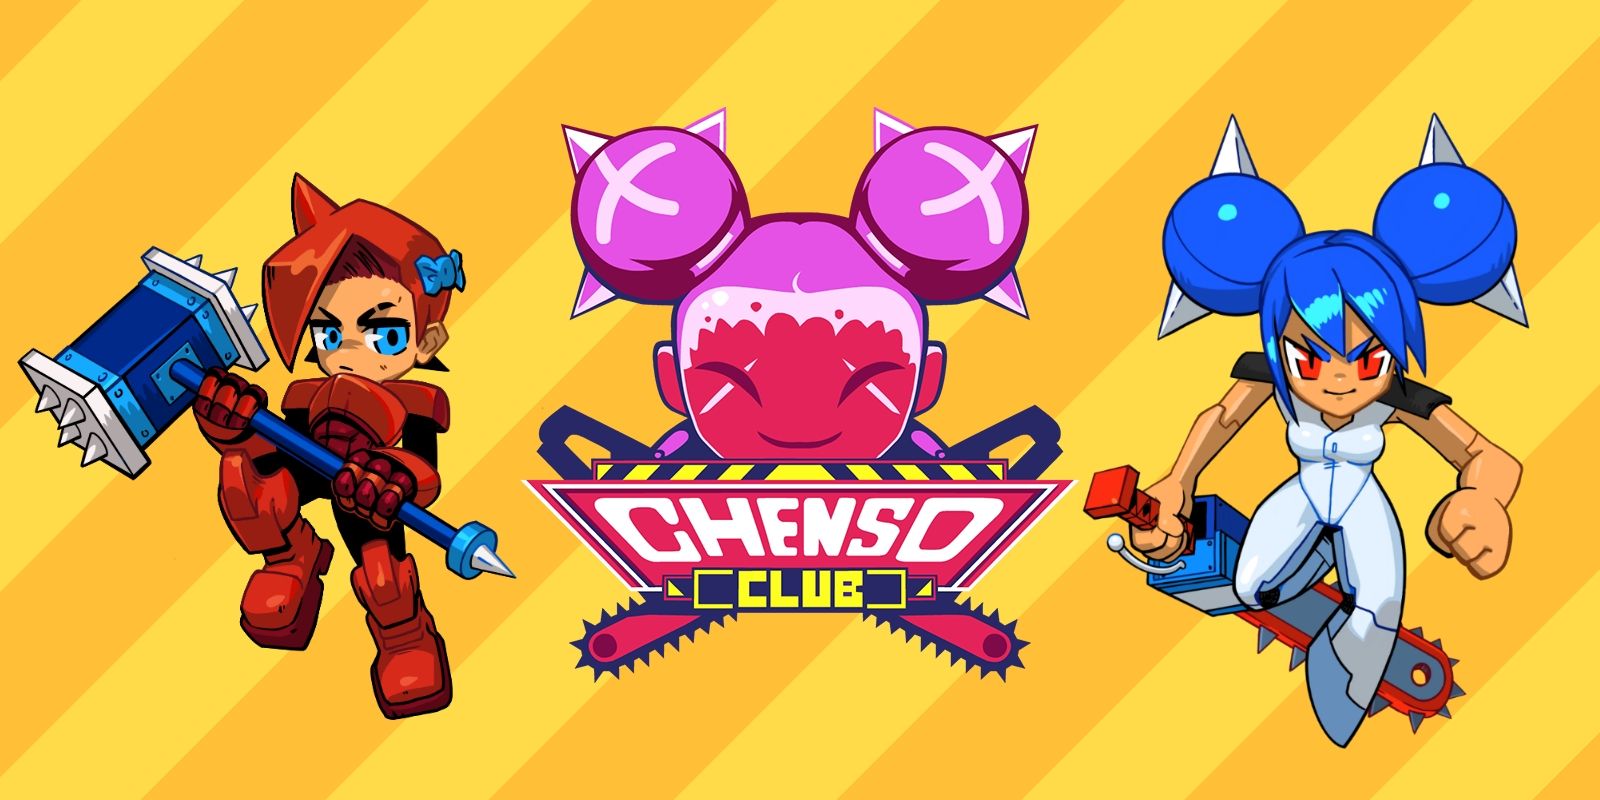 Chenso Club: Smashing Aliens for the Likes